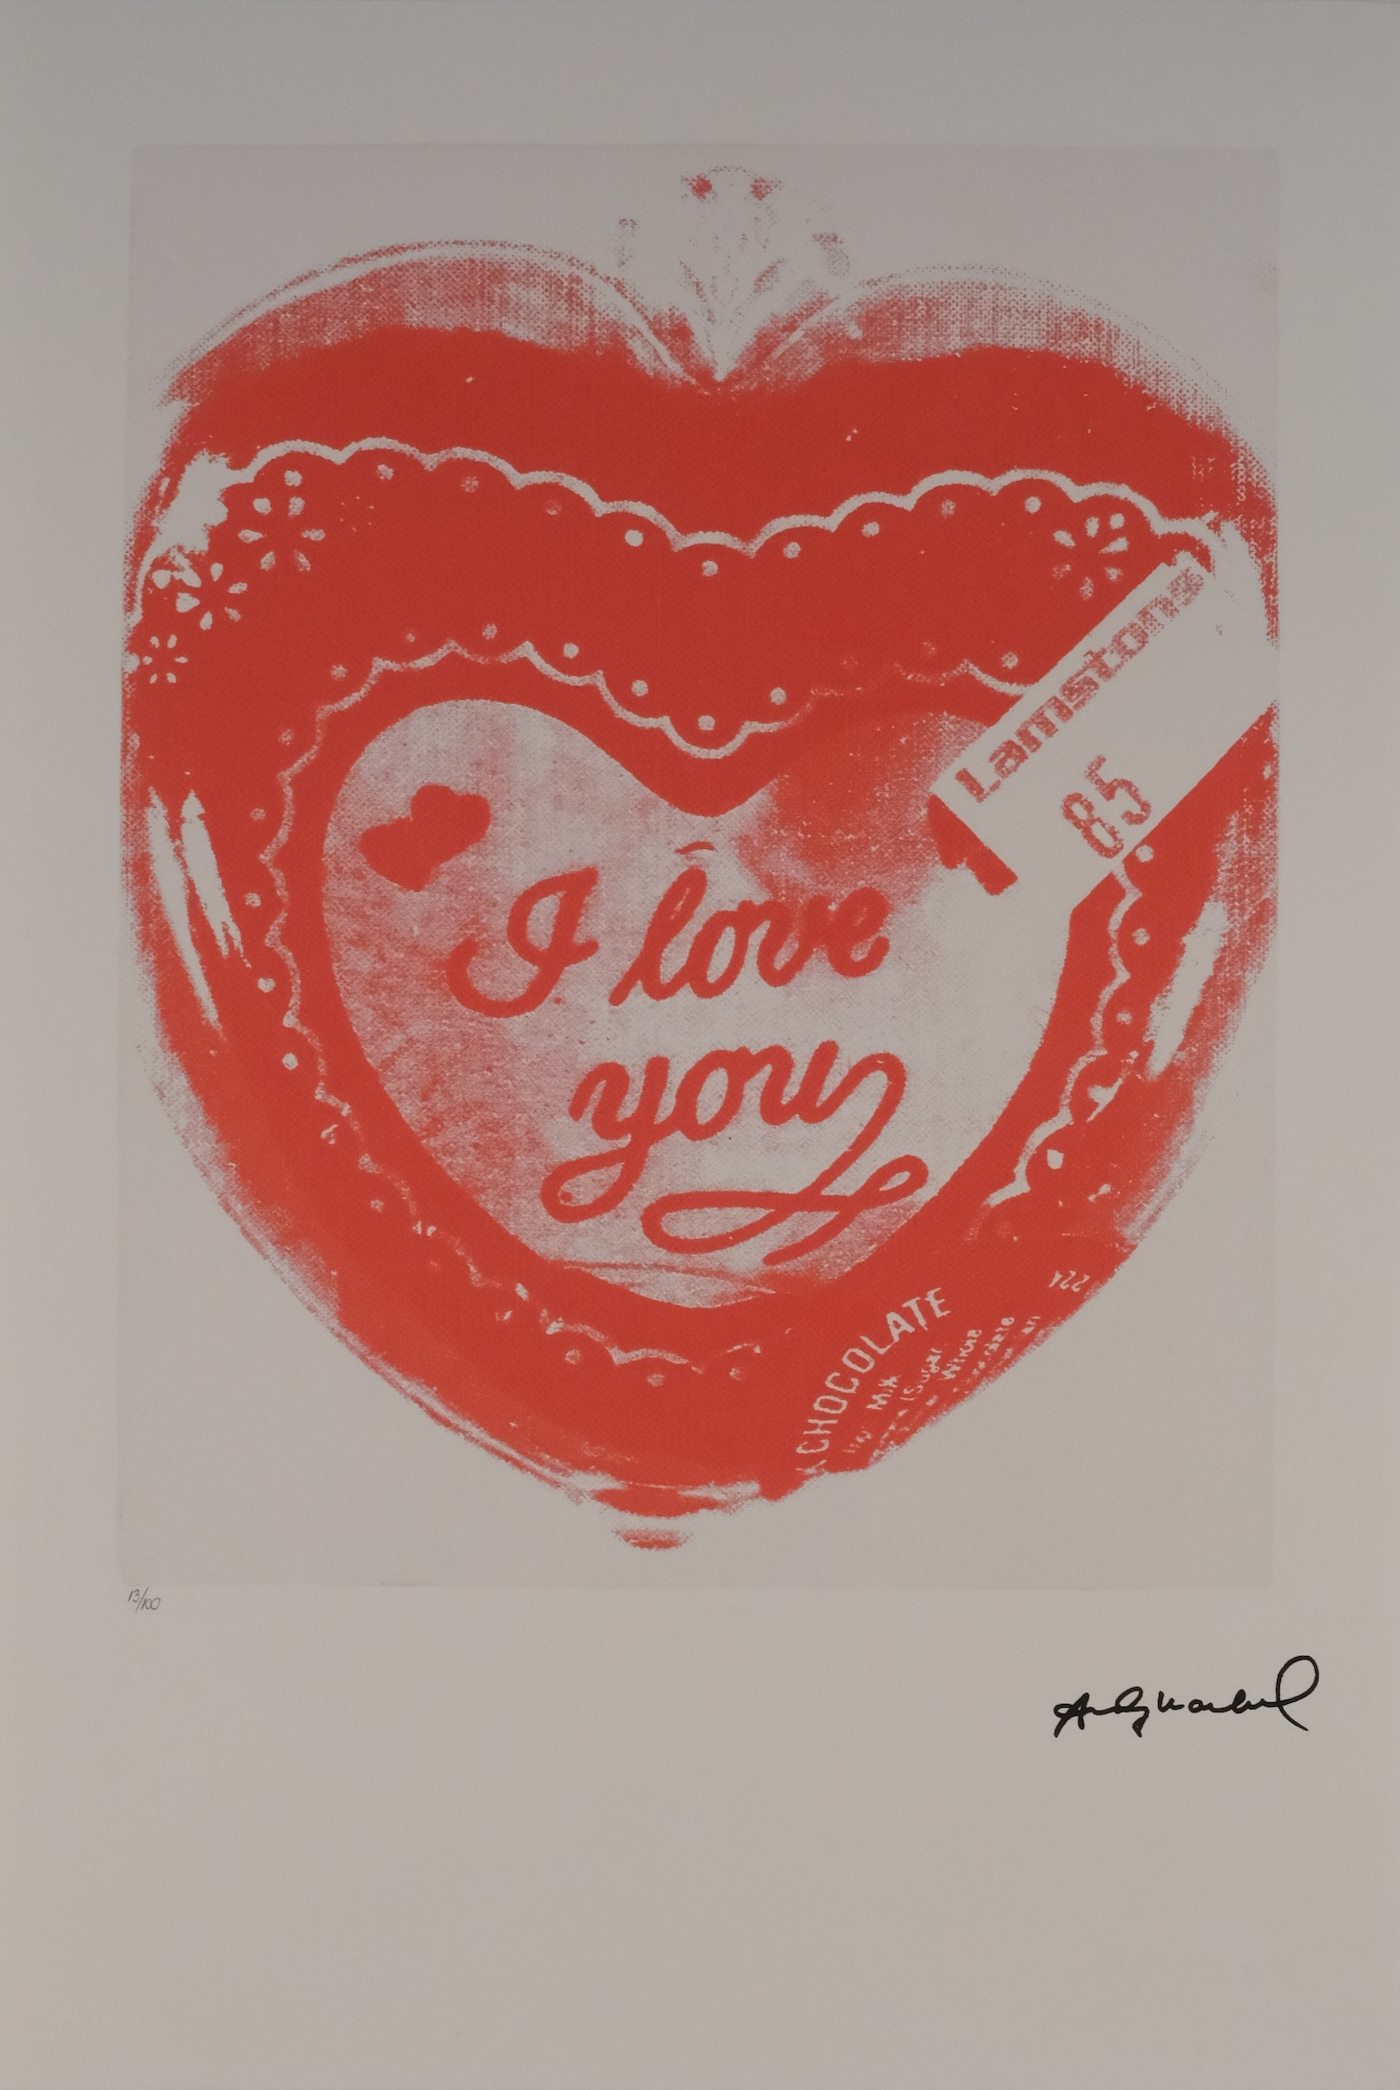 Andy Warhol - I love you